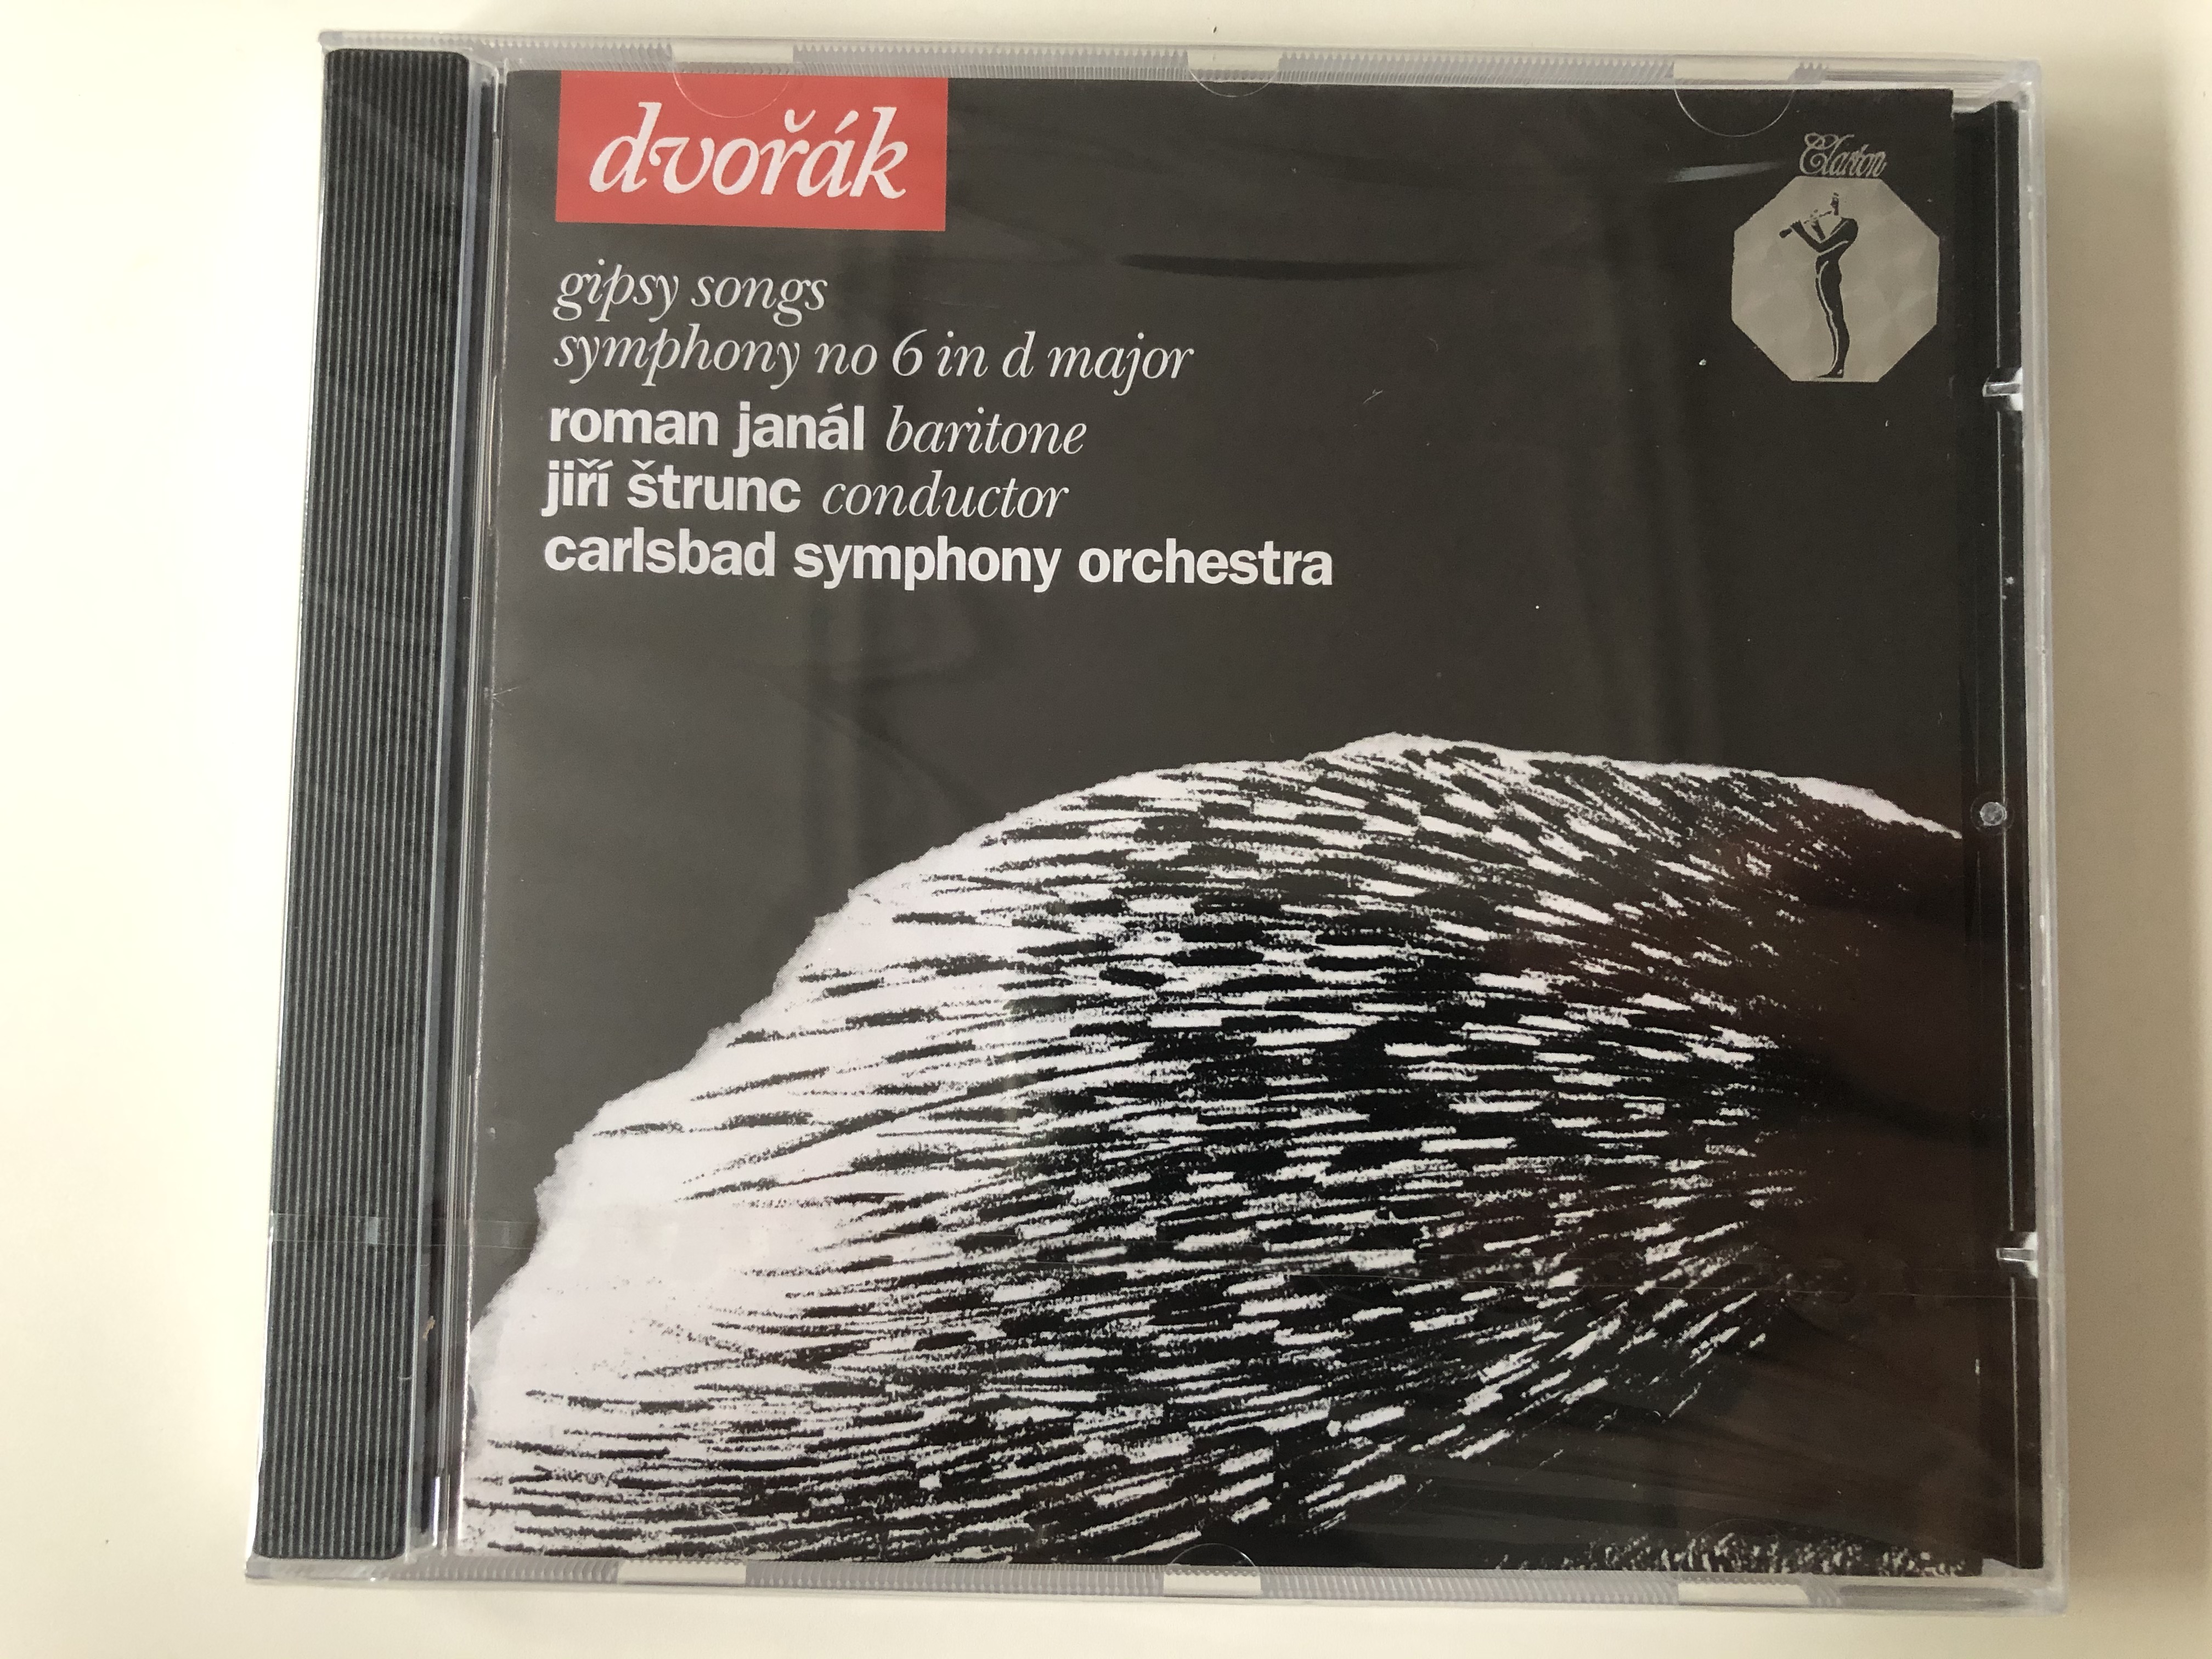 dvorak-gipsy-songs-symphony-no-6-in-d-major-roman-janal-baritone-jiri-trunc-conductor-carlsbad-symphony-orchestra-clarton-audio-cd-1997-cq-0032-2-031-1-.jpg